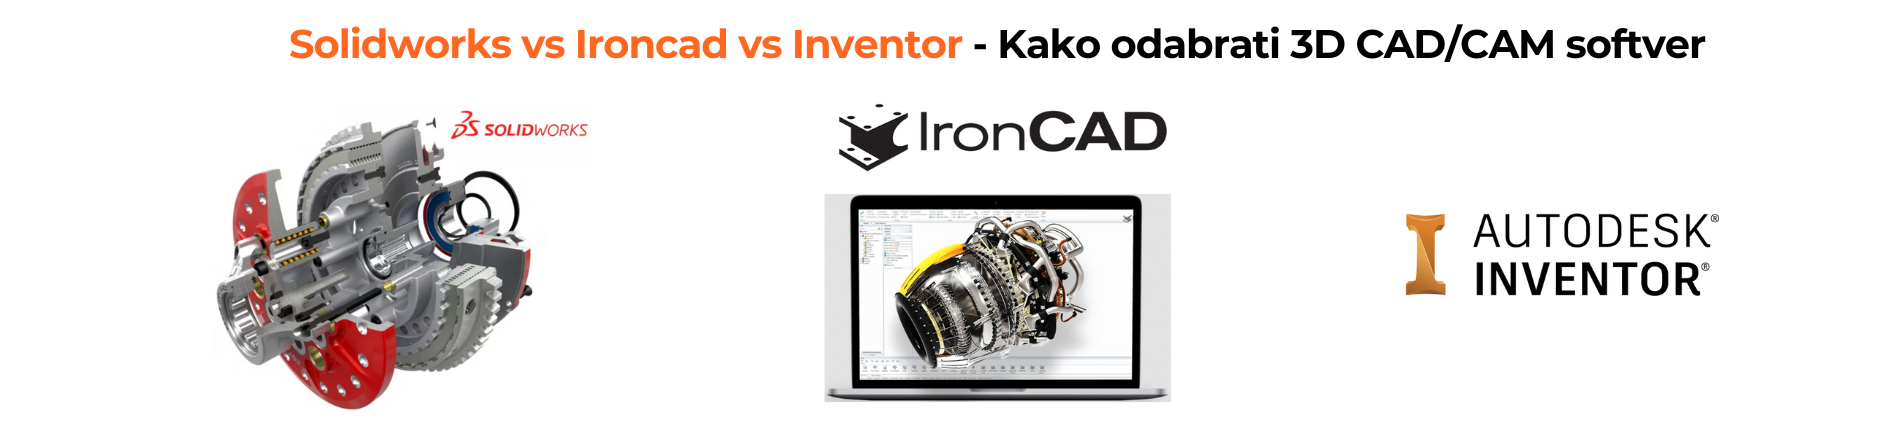 https://www.progecad.com.hr/Repository/BANERI/Solidworks vs Ironcad vs Autodesk Inventor.png